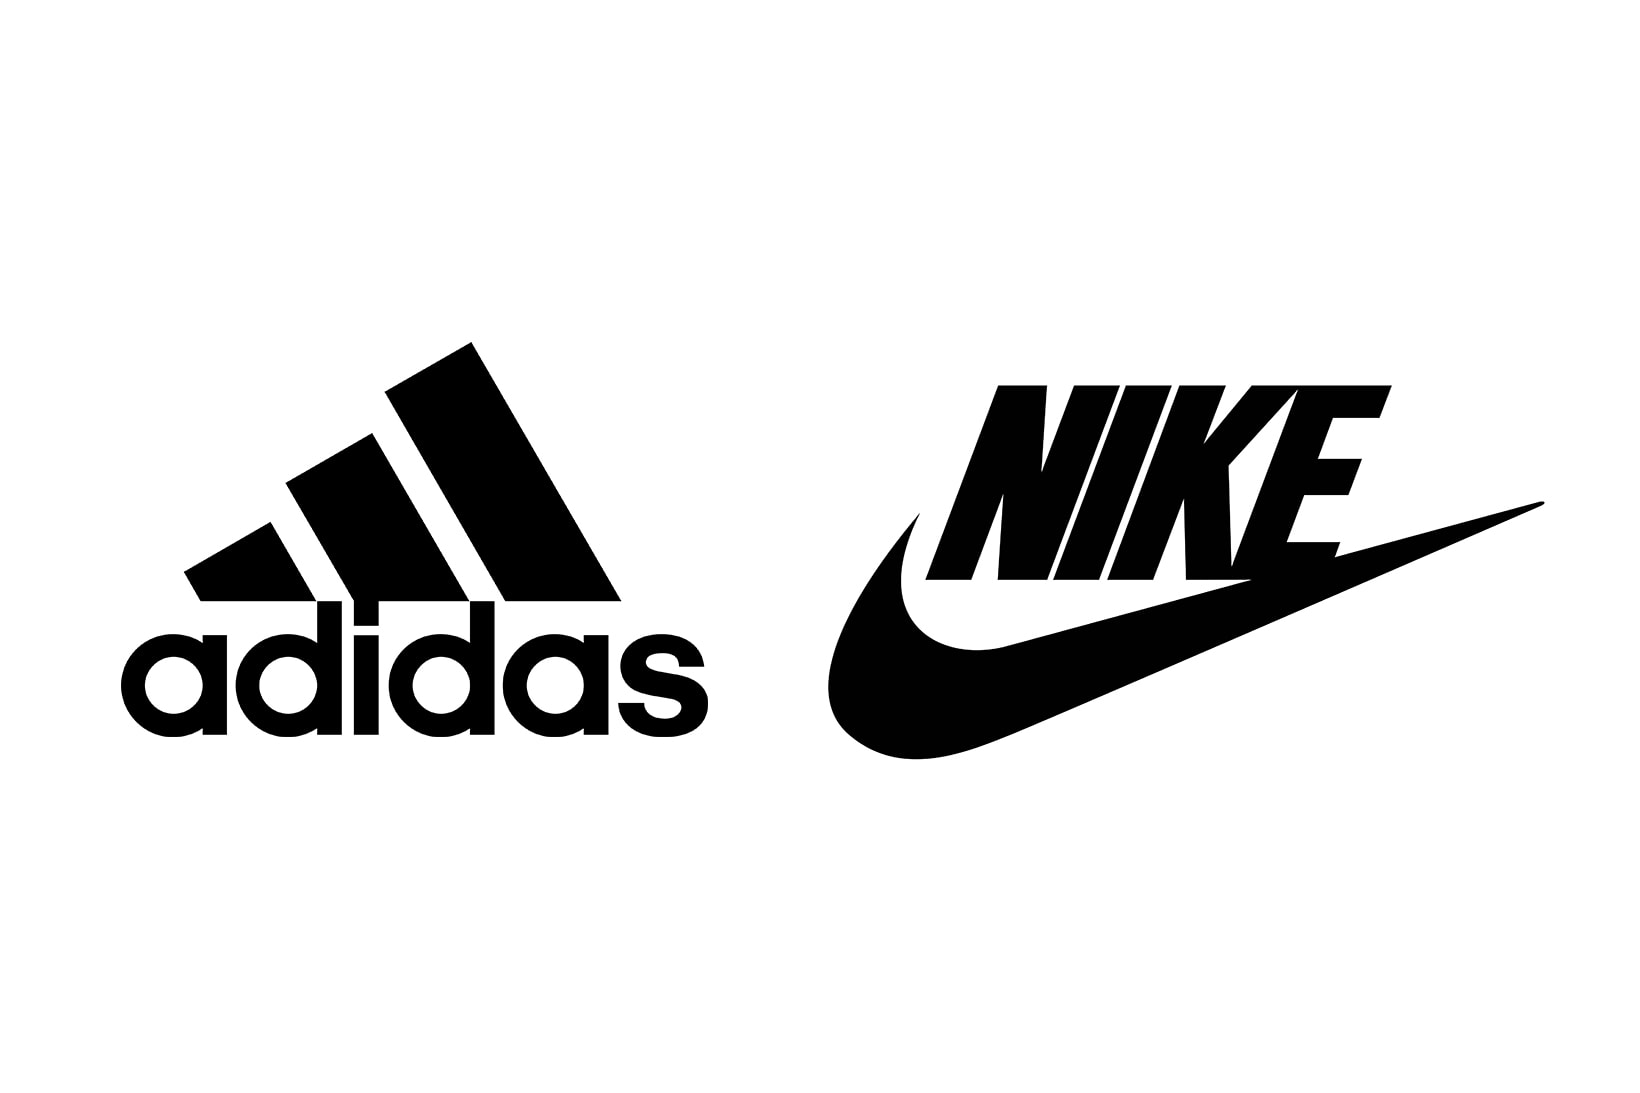 Adidas Files Copyright Infringement Lawsuit Against Nike